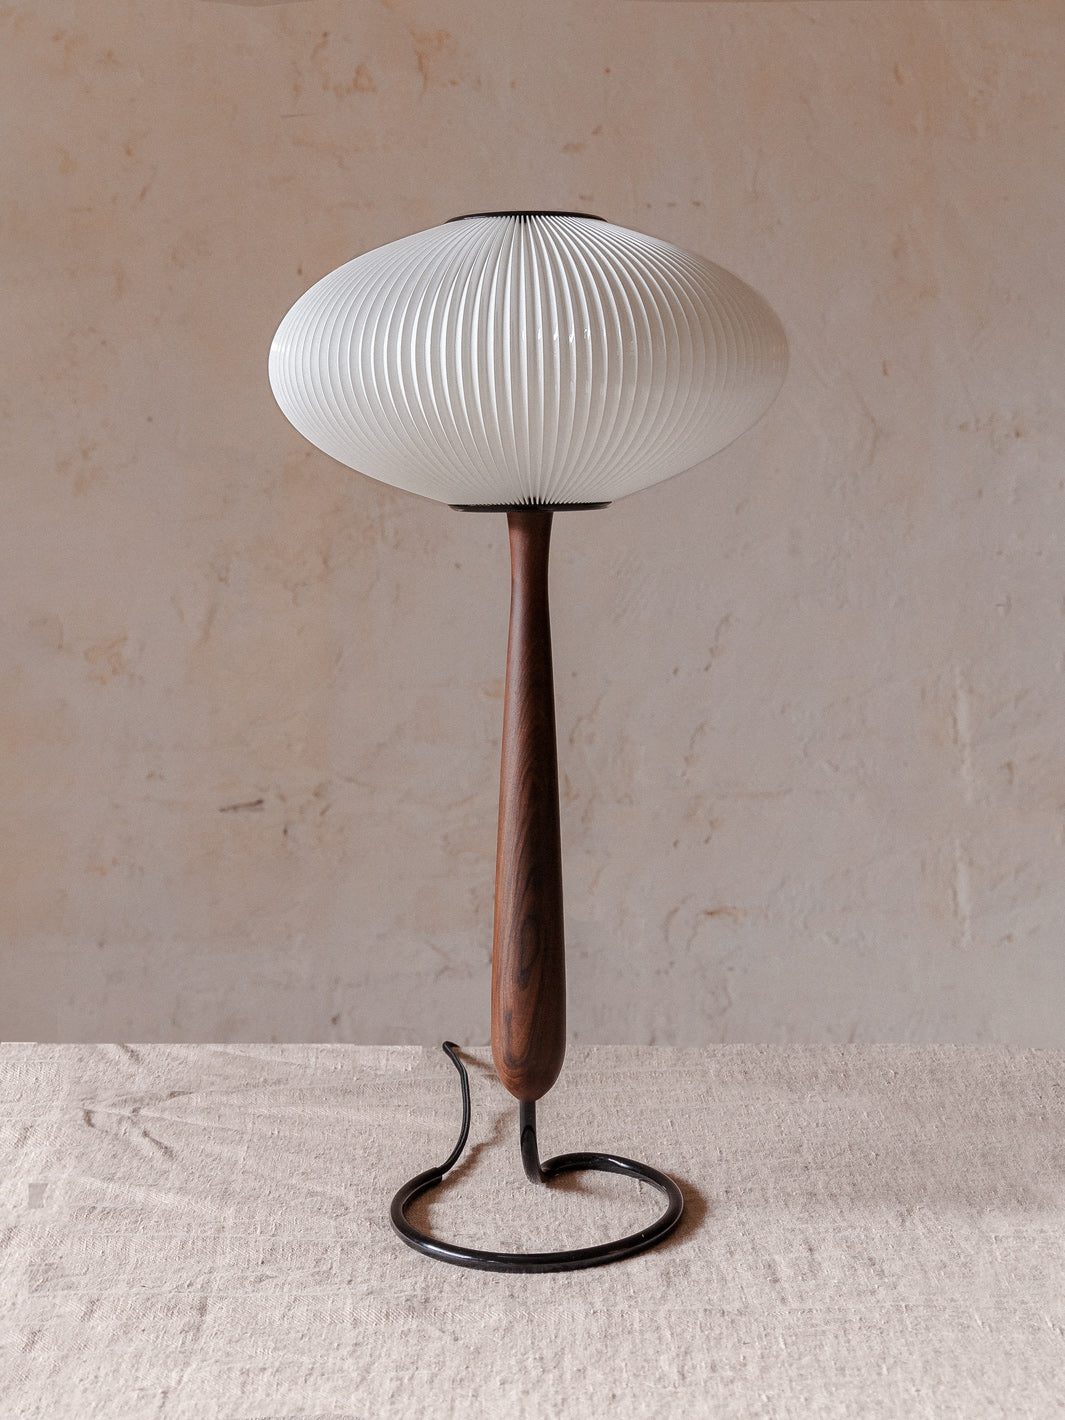 L'Opulus lamp by Rispal